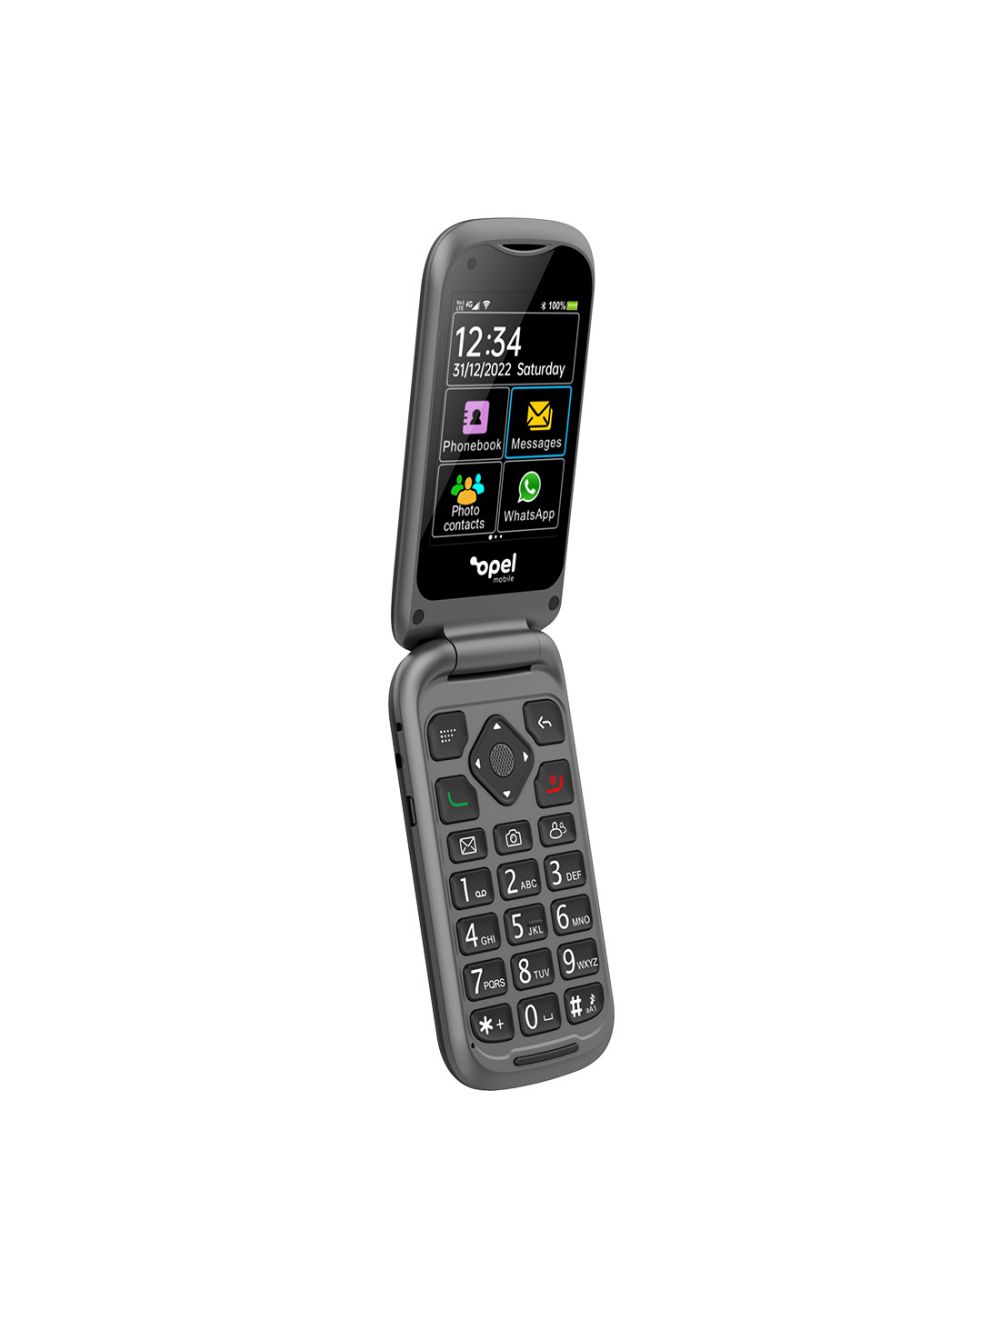 Opel Mobile 4G TouchFlip (2.8'', Big Button, Flip Phone) - Black